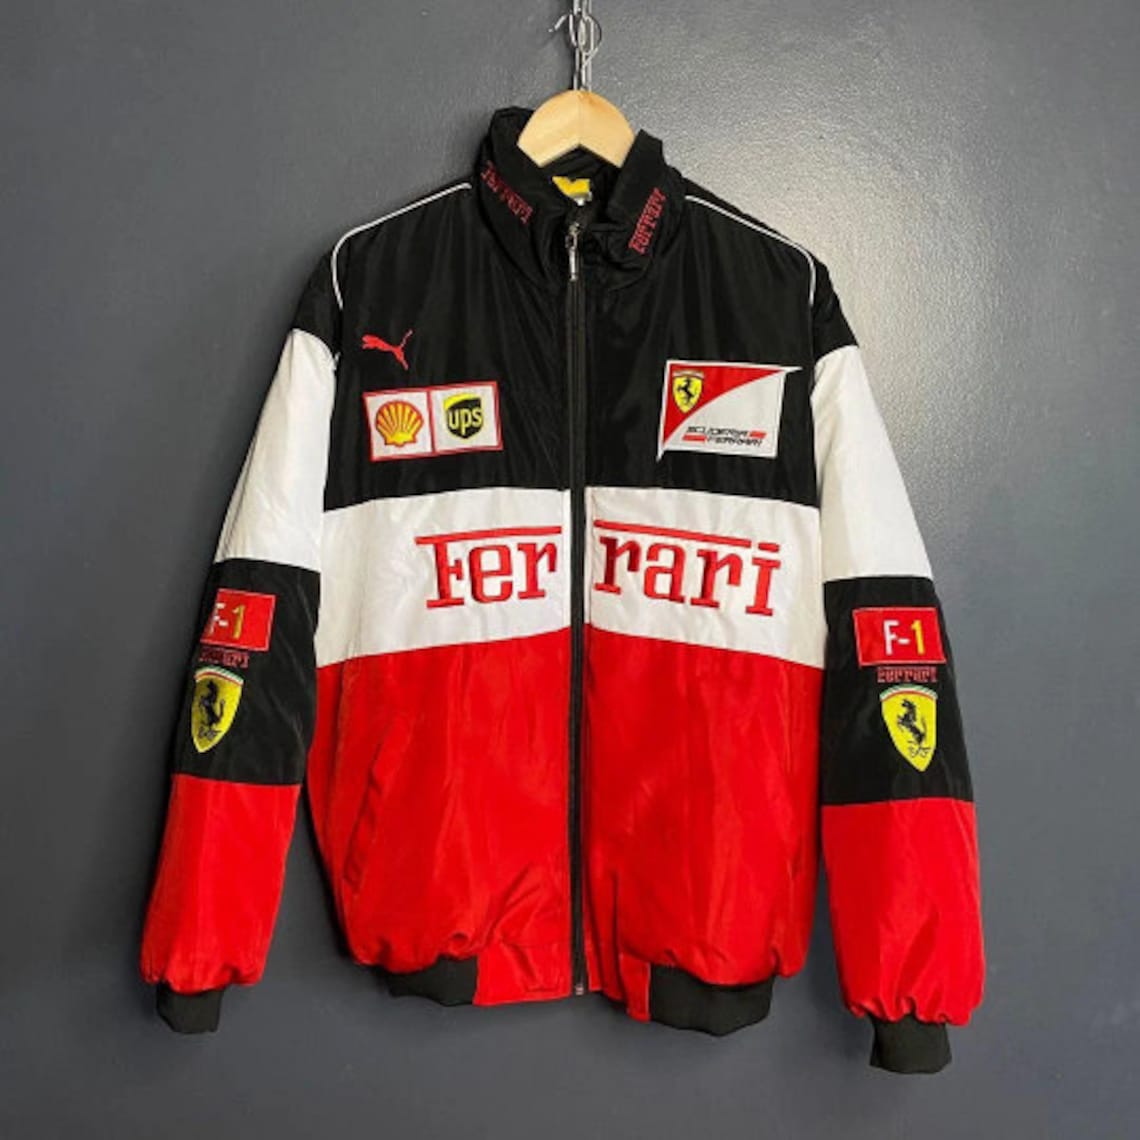 Racing Jacket Vintage Bomber Jacket F1 Streetwear Jacket - Etsy